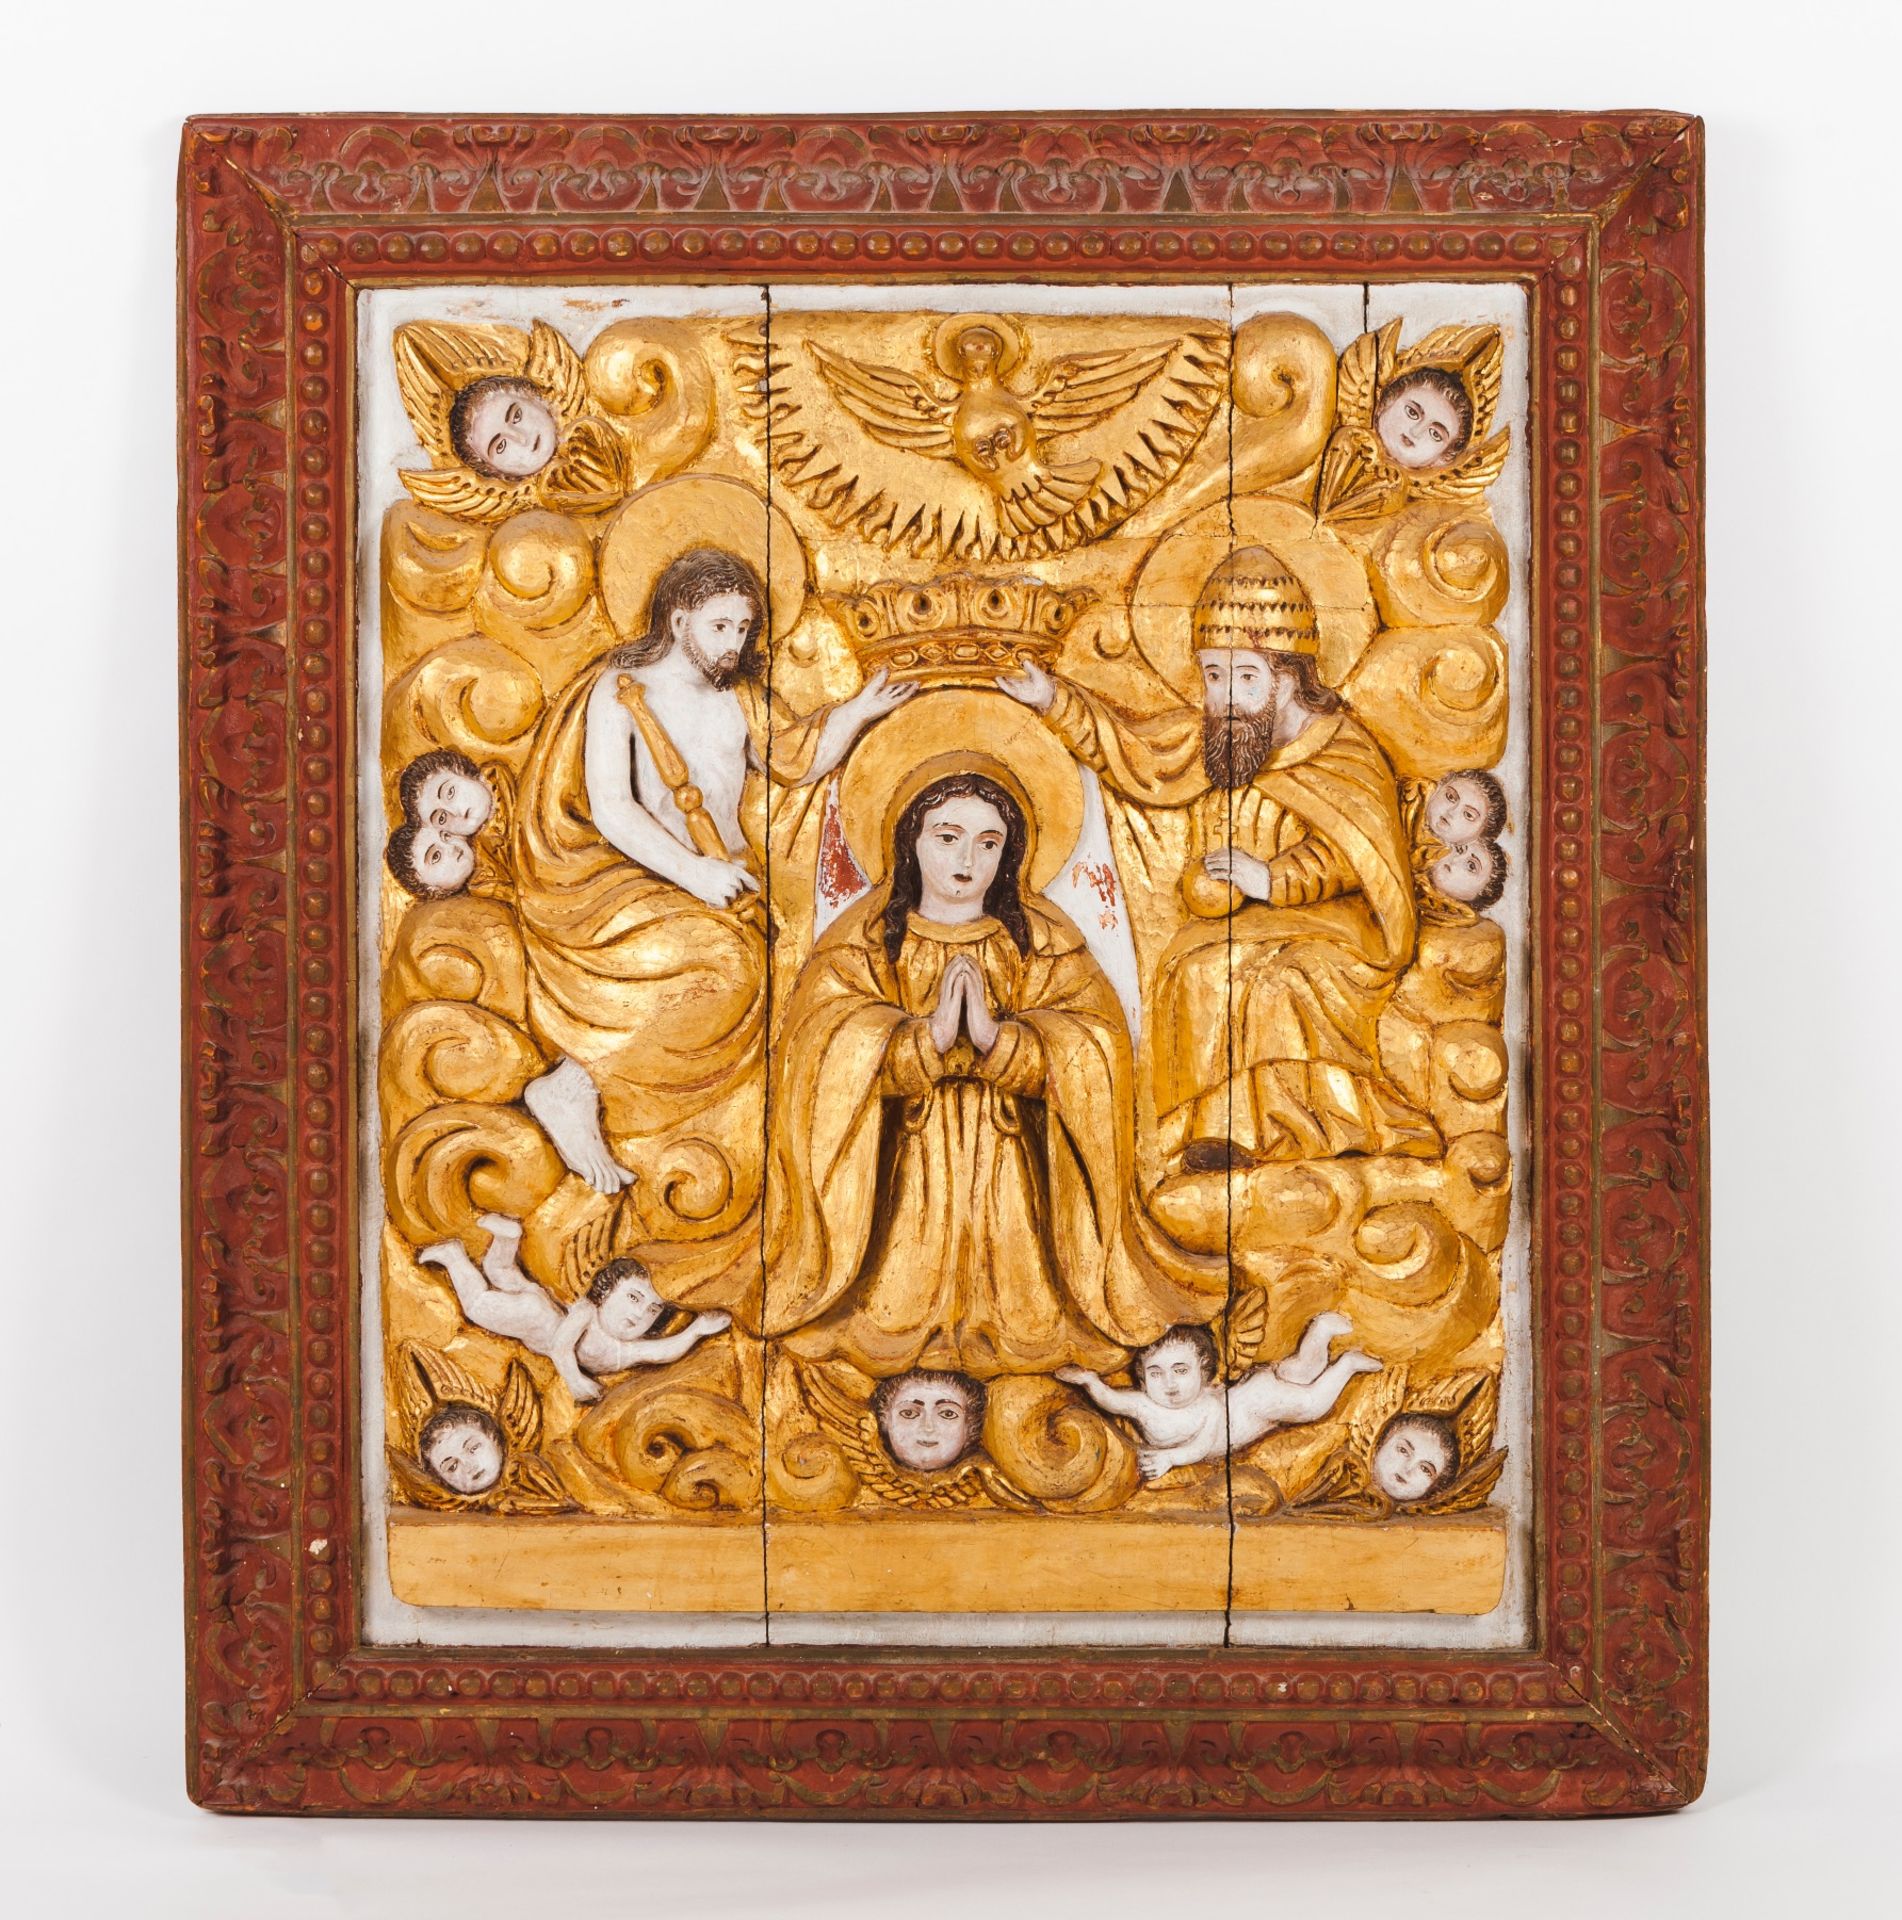 An important "Coronation of The Virgin" altarpiece